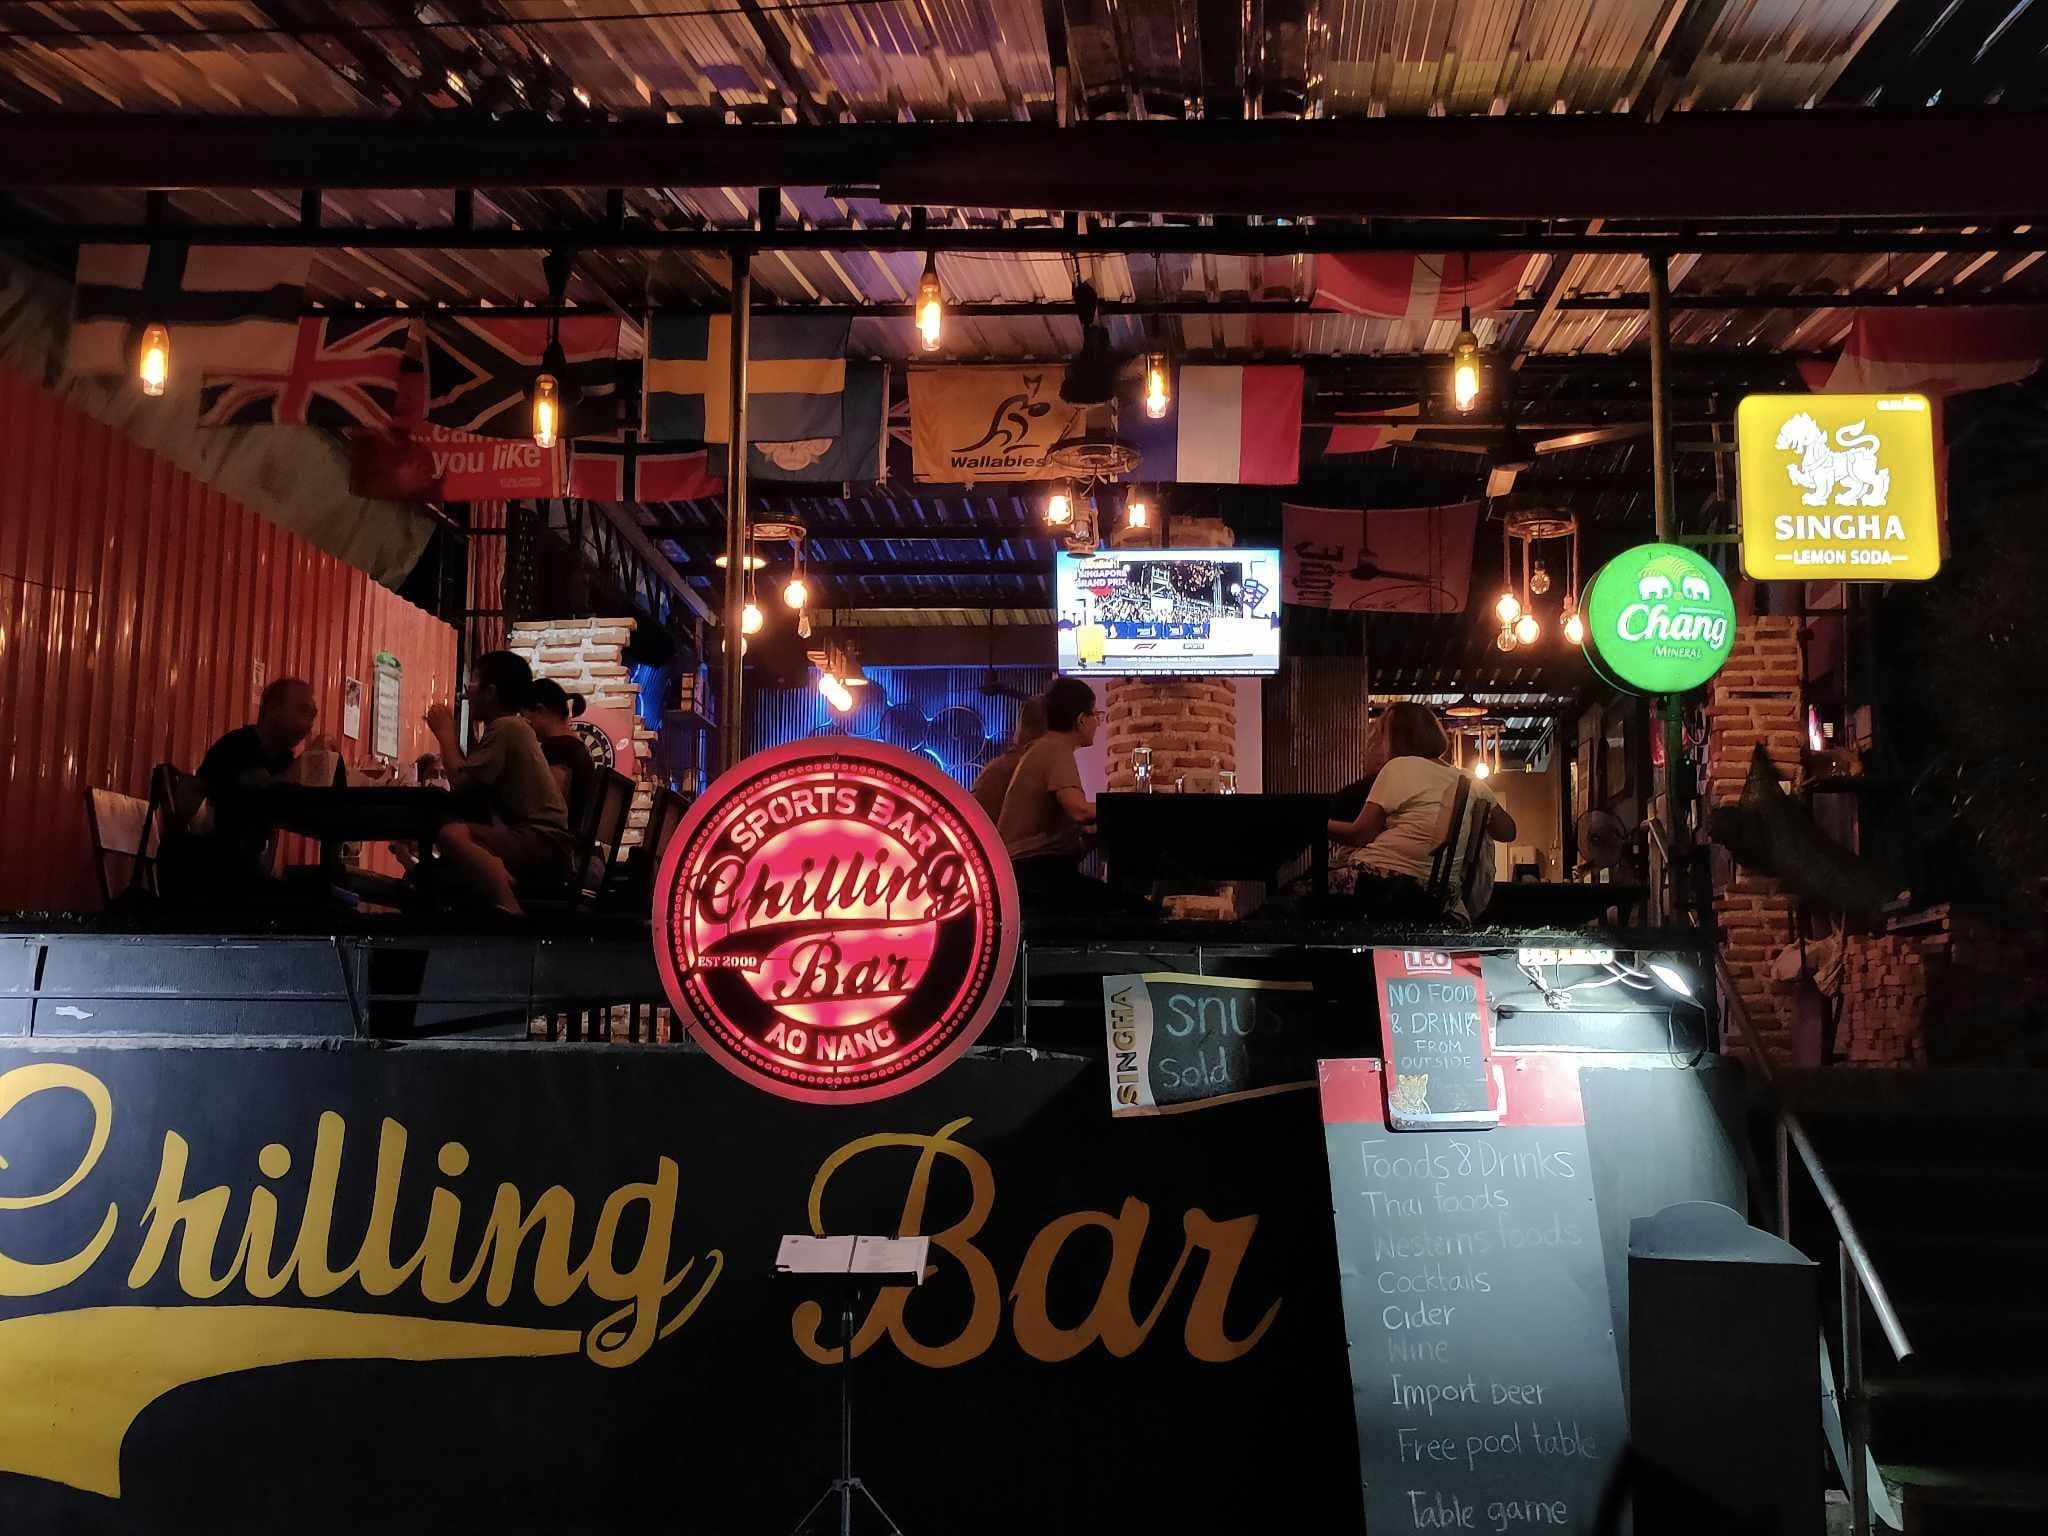 Chilling bar Ao Nang, bar in Krabi